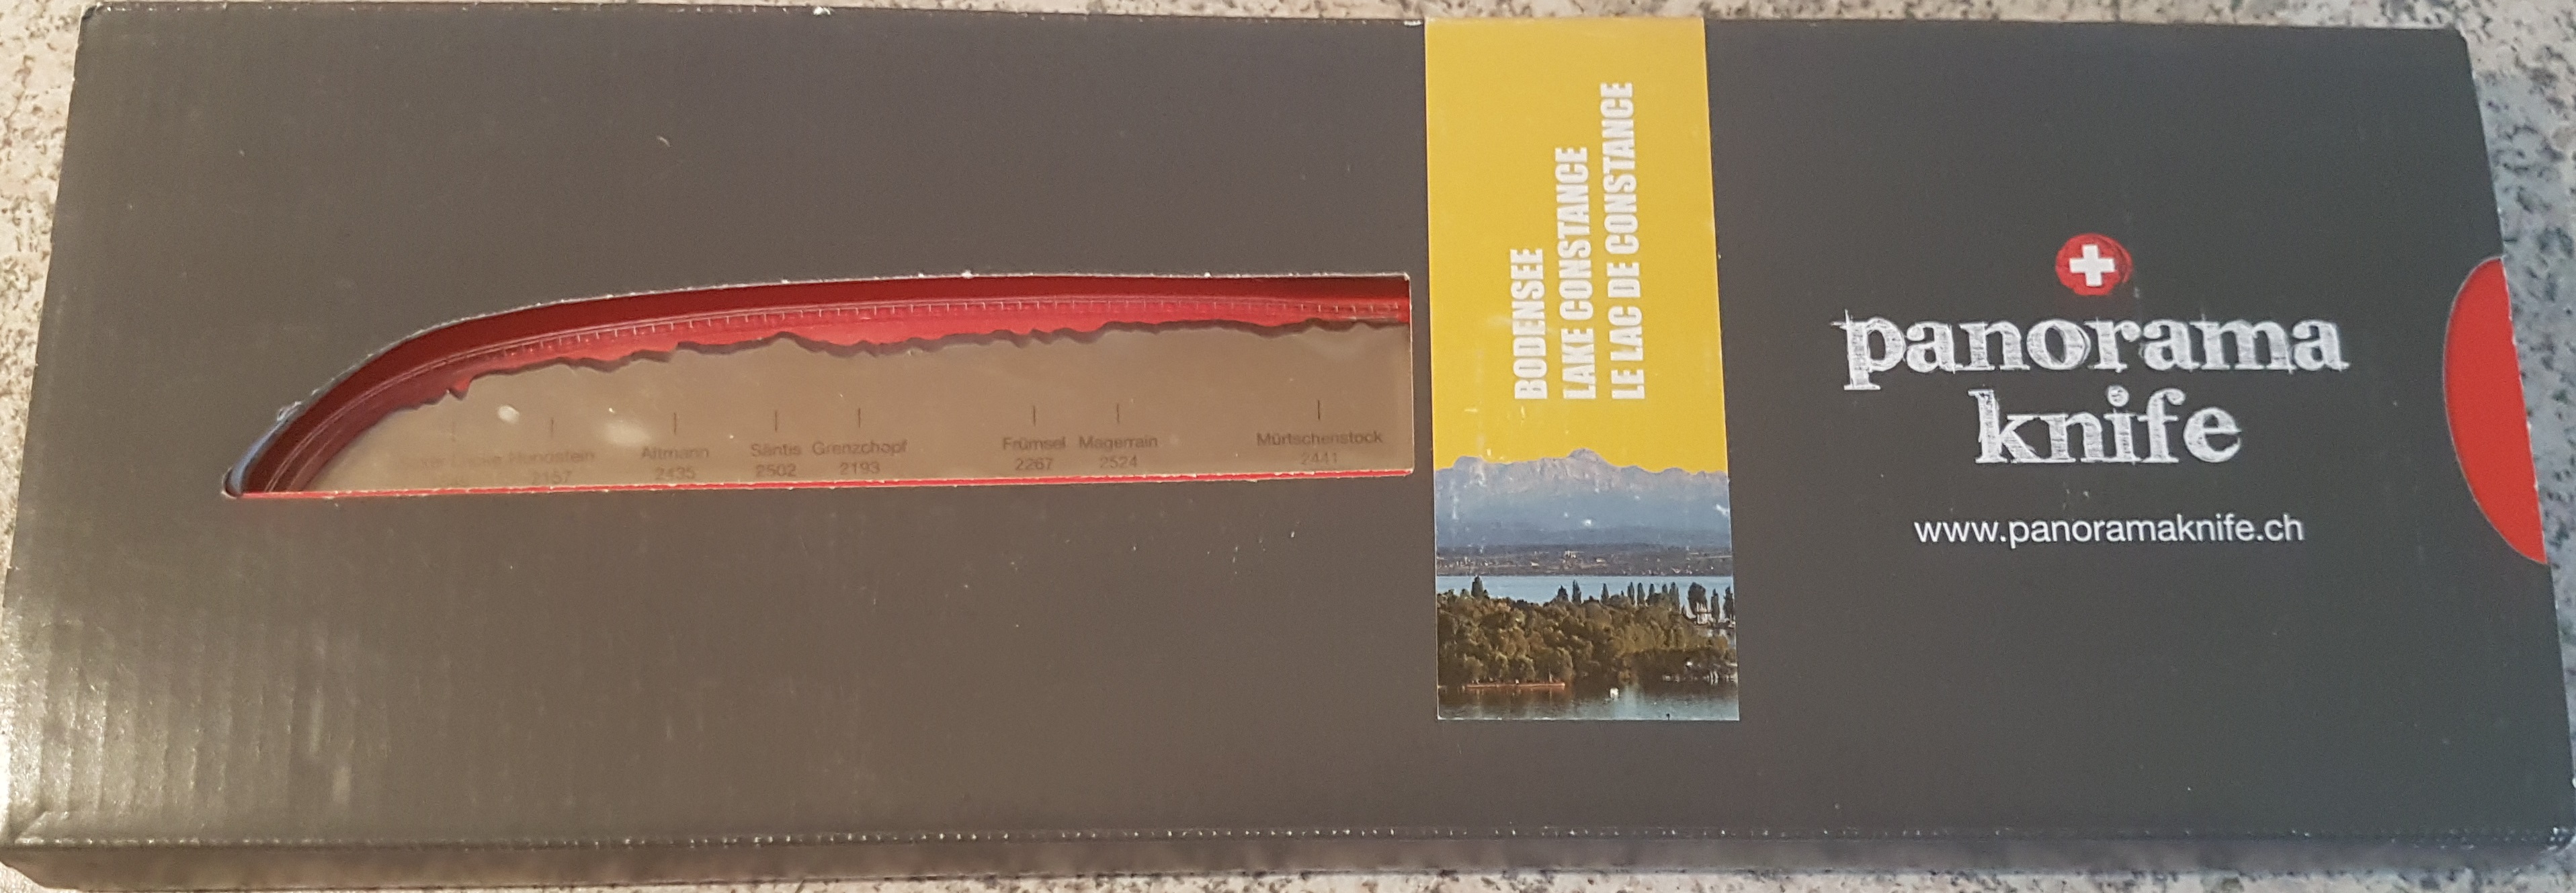 panorama-knife-bodensee-universalmesser-verpackung